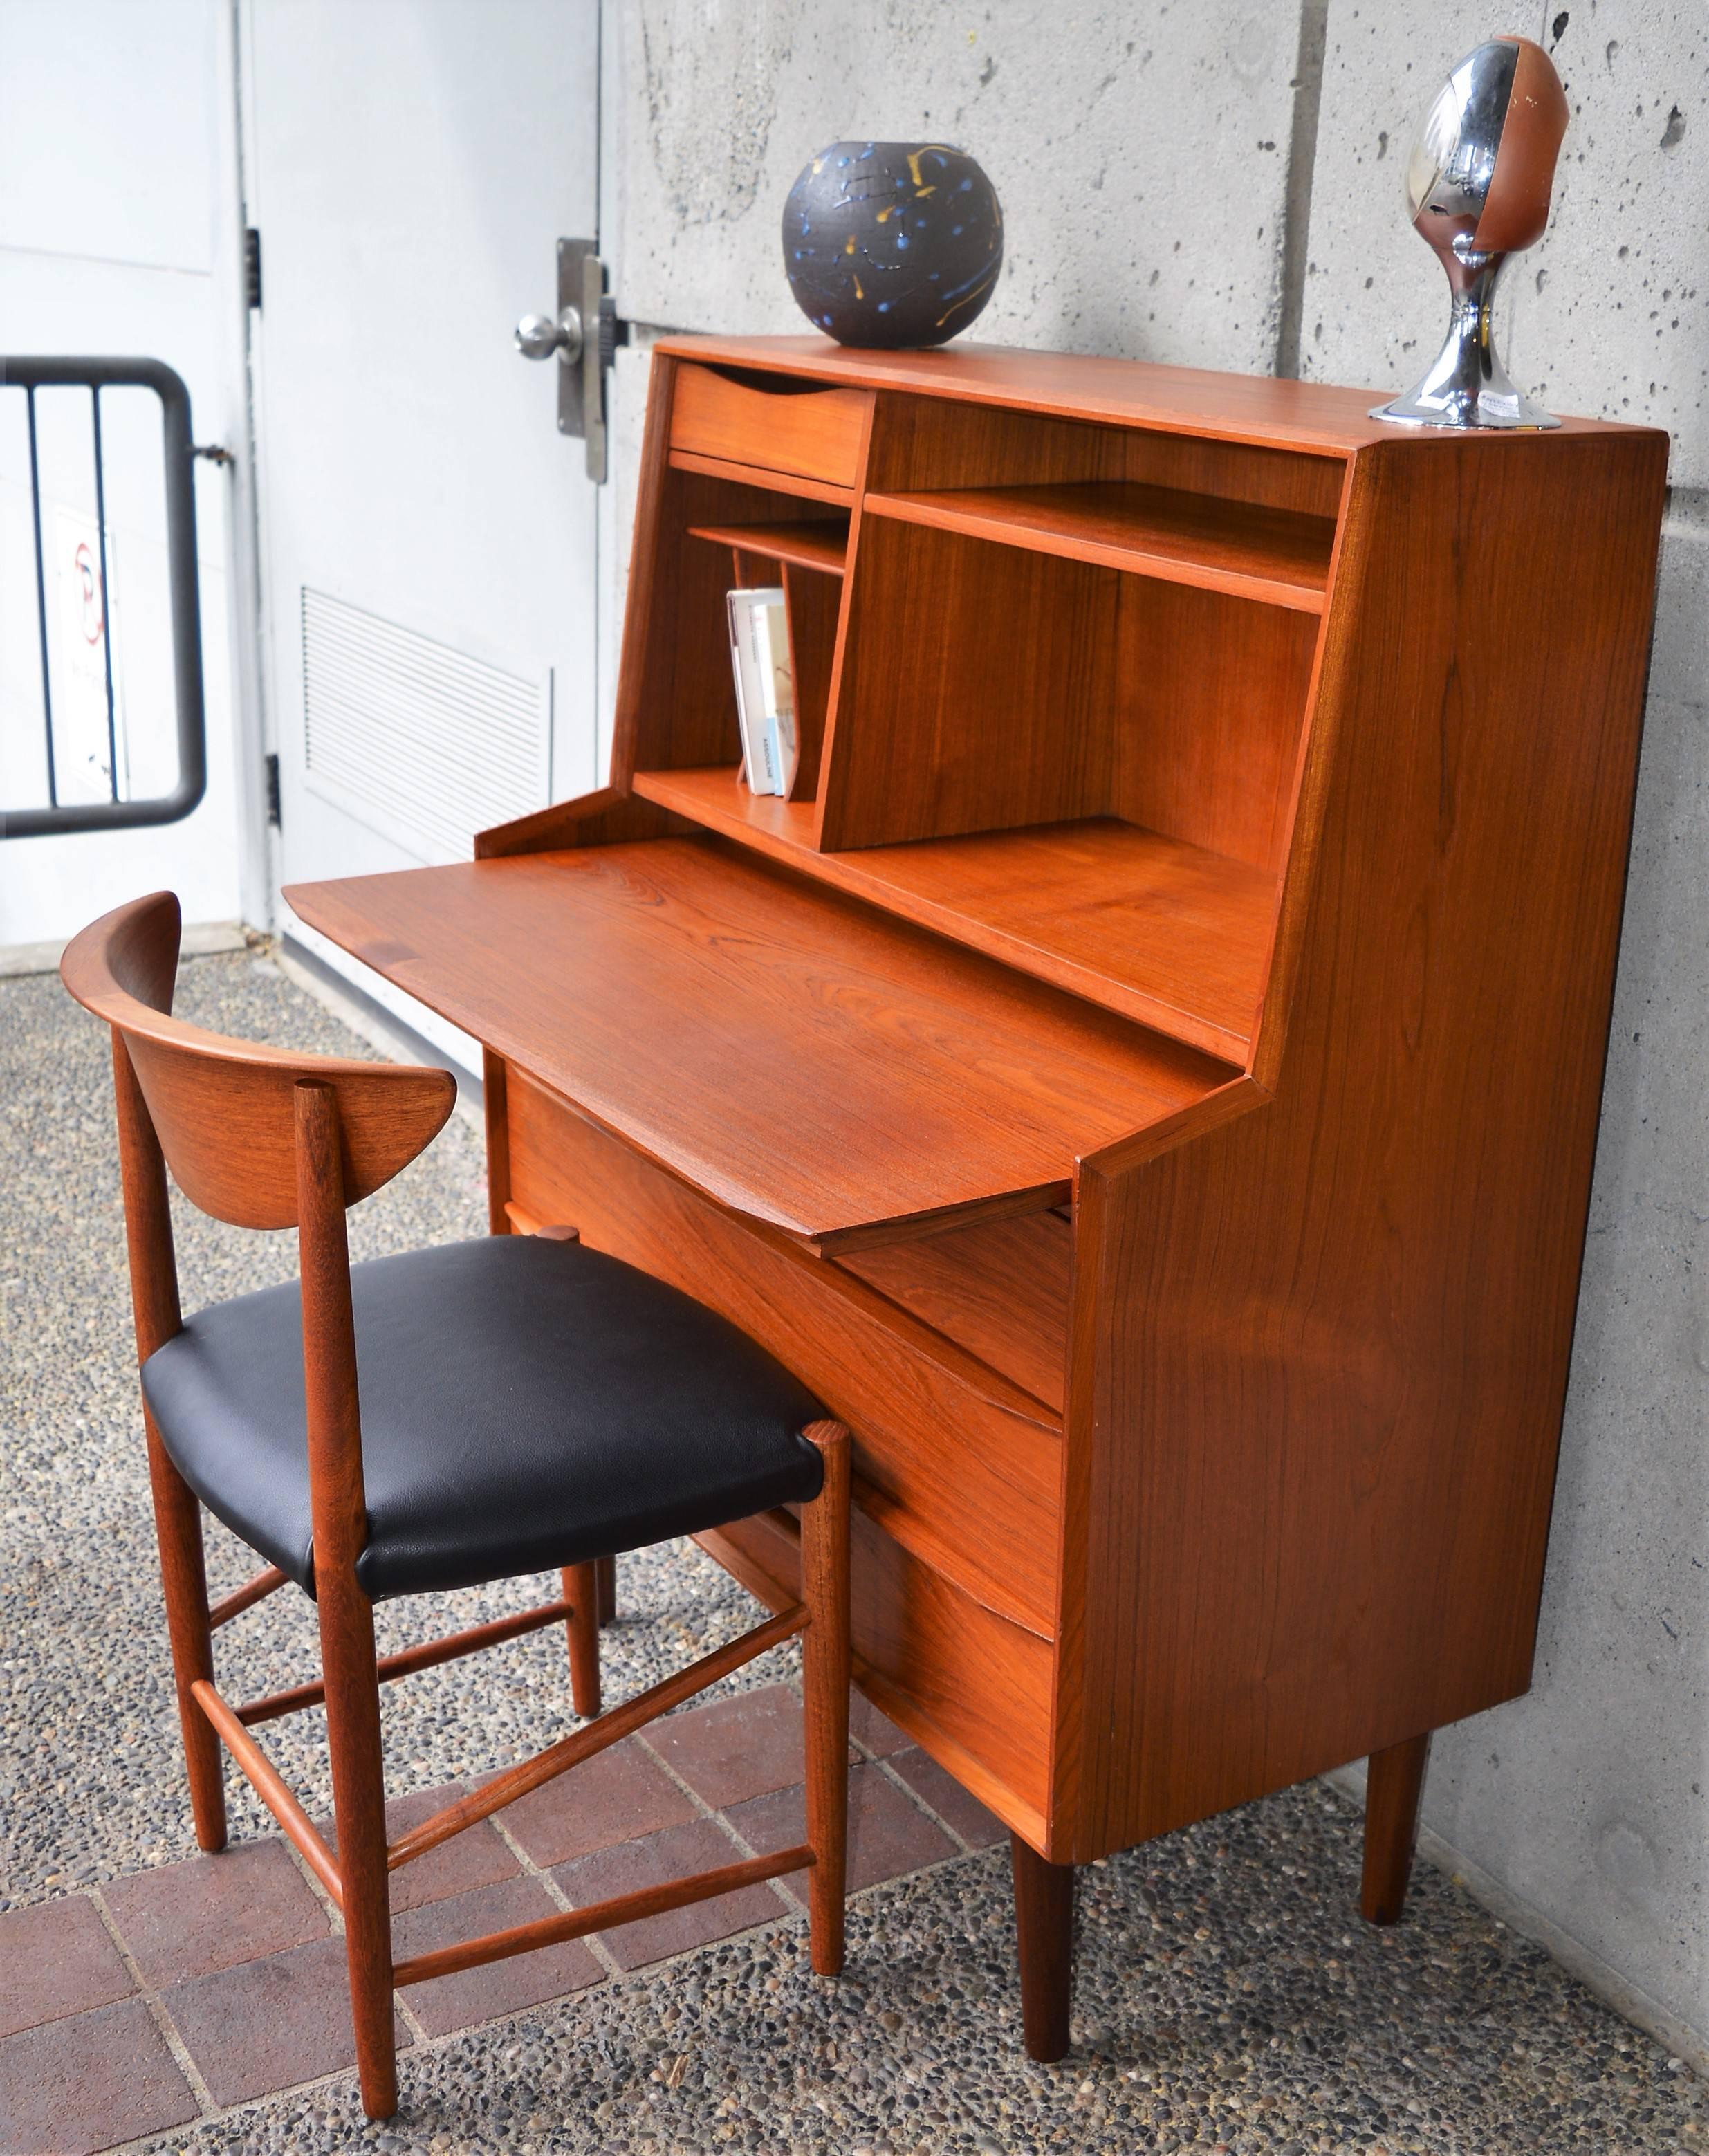 Scandinavian Danish Modern Teak Secretary Dresser with Pigeon Hole Storage & Pull Out Desktop